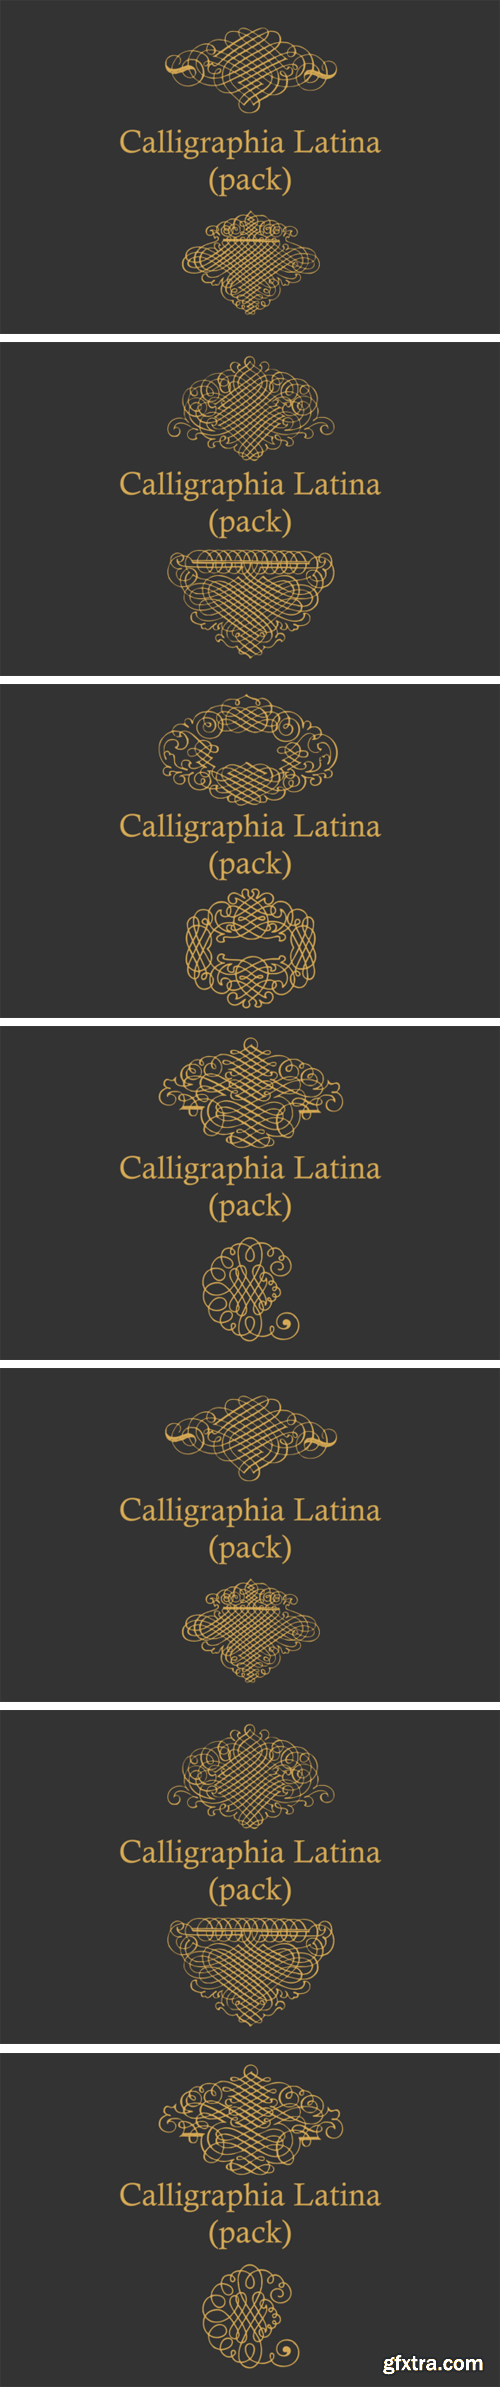 Fontbundles - Calligraphia Latina Pack 38533